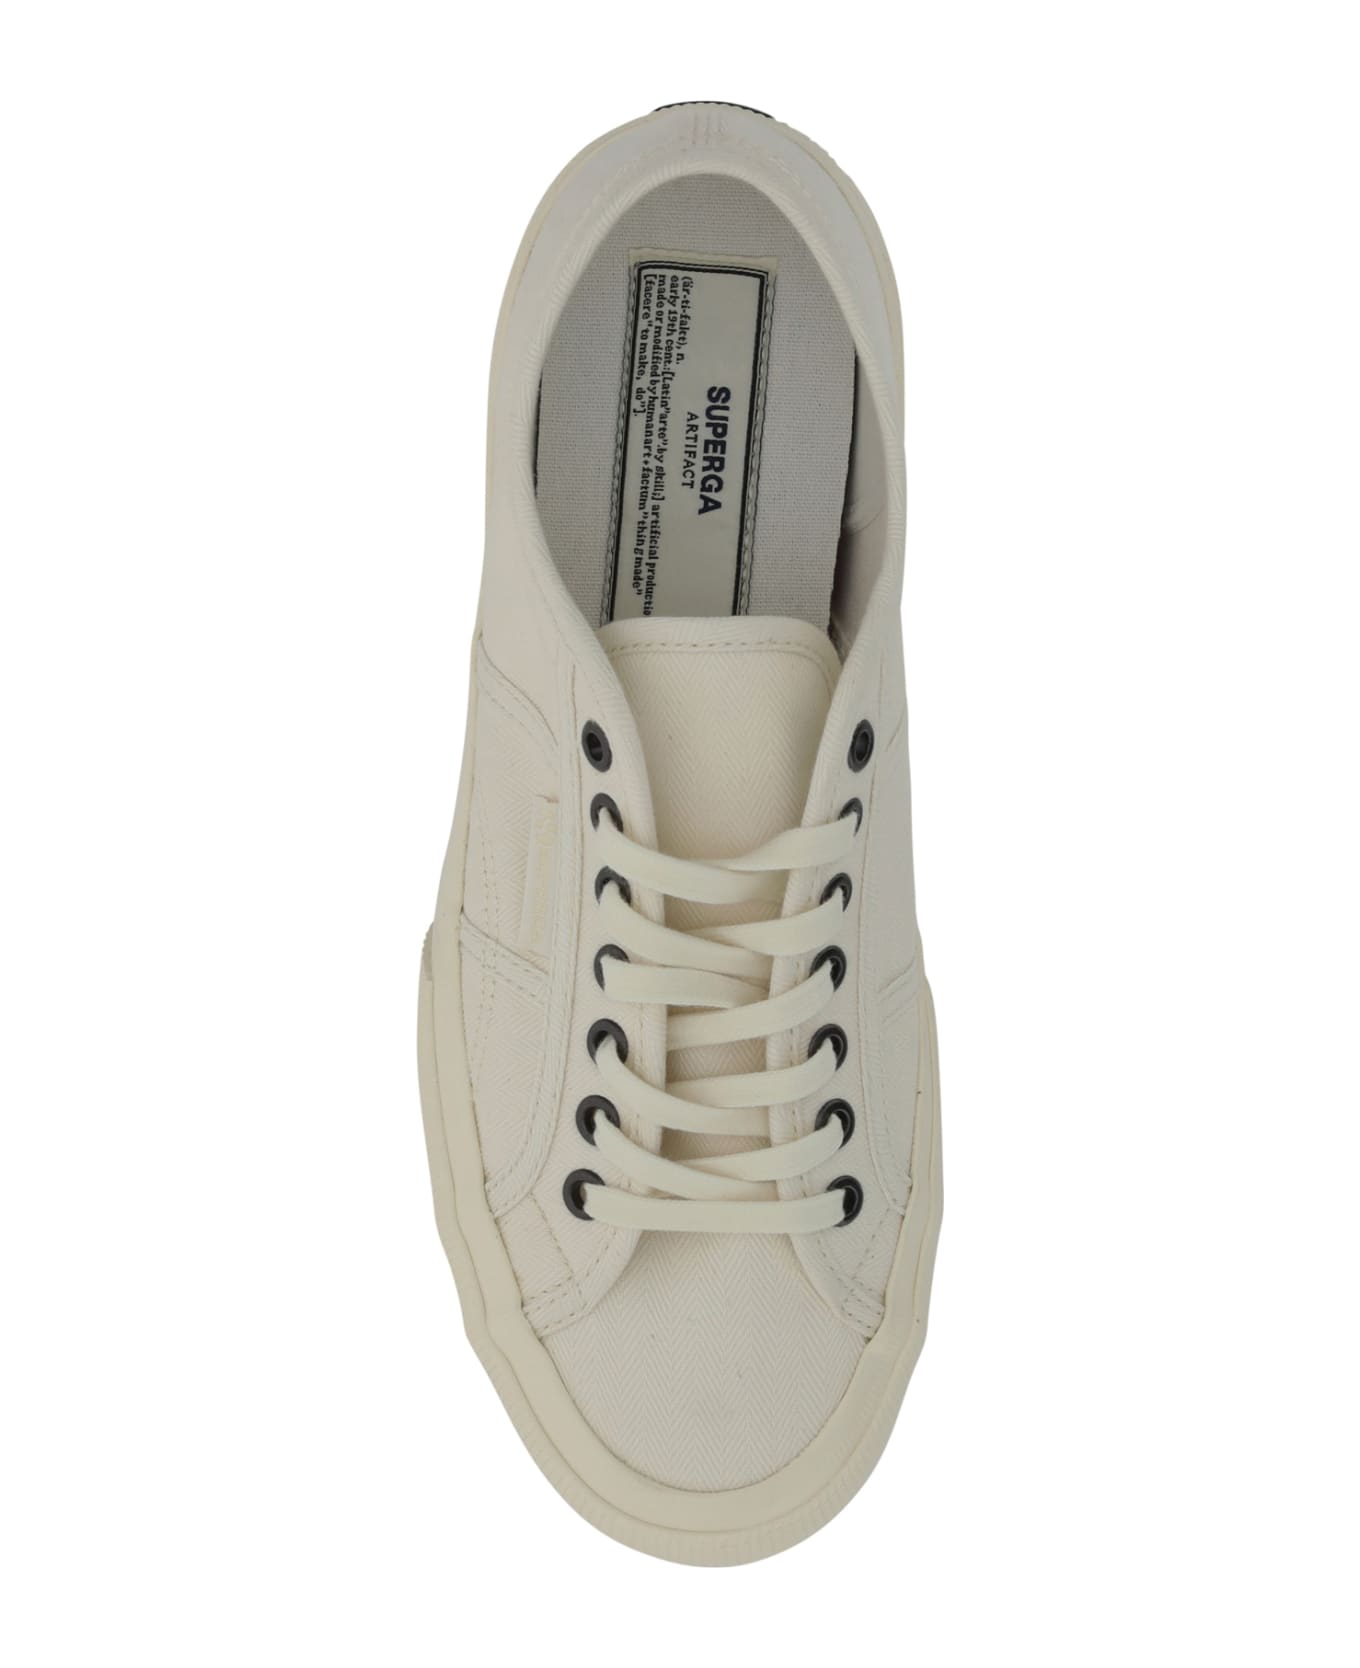 Superga Artifact Herringbone Sneakers - Beige Raw-off White